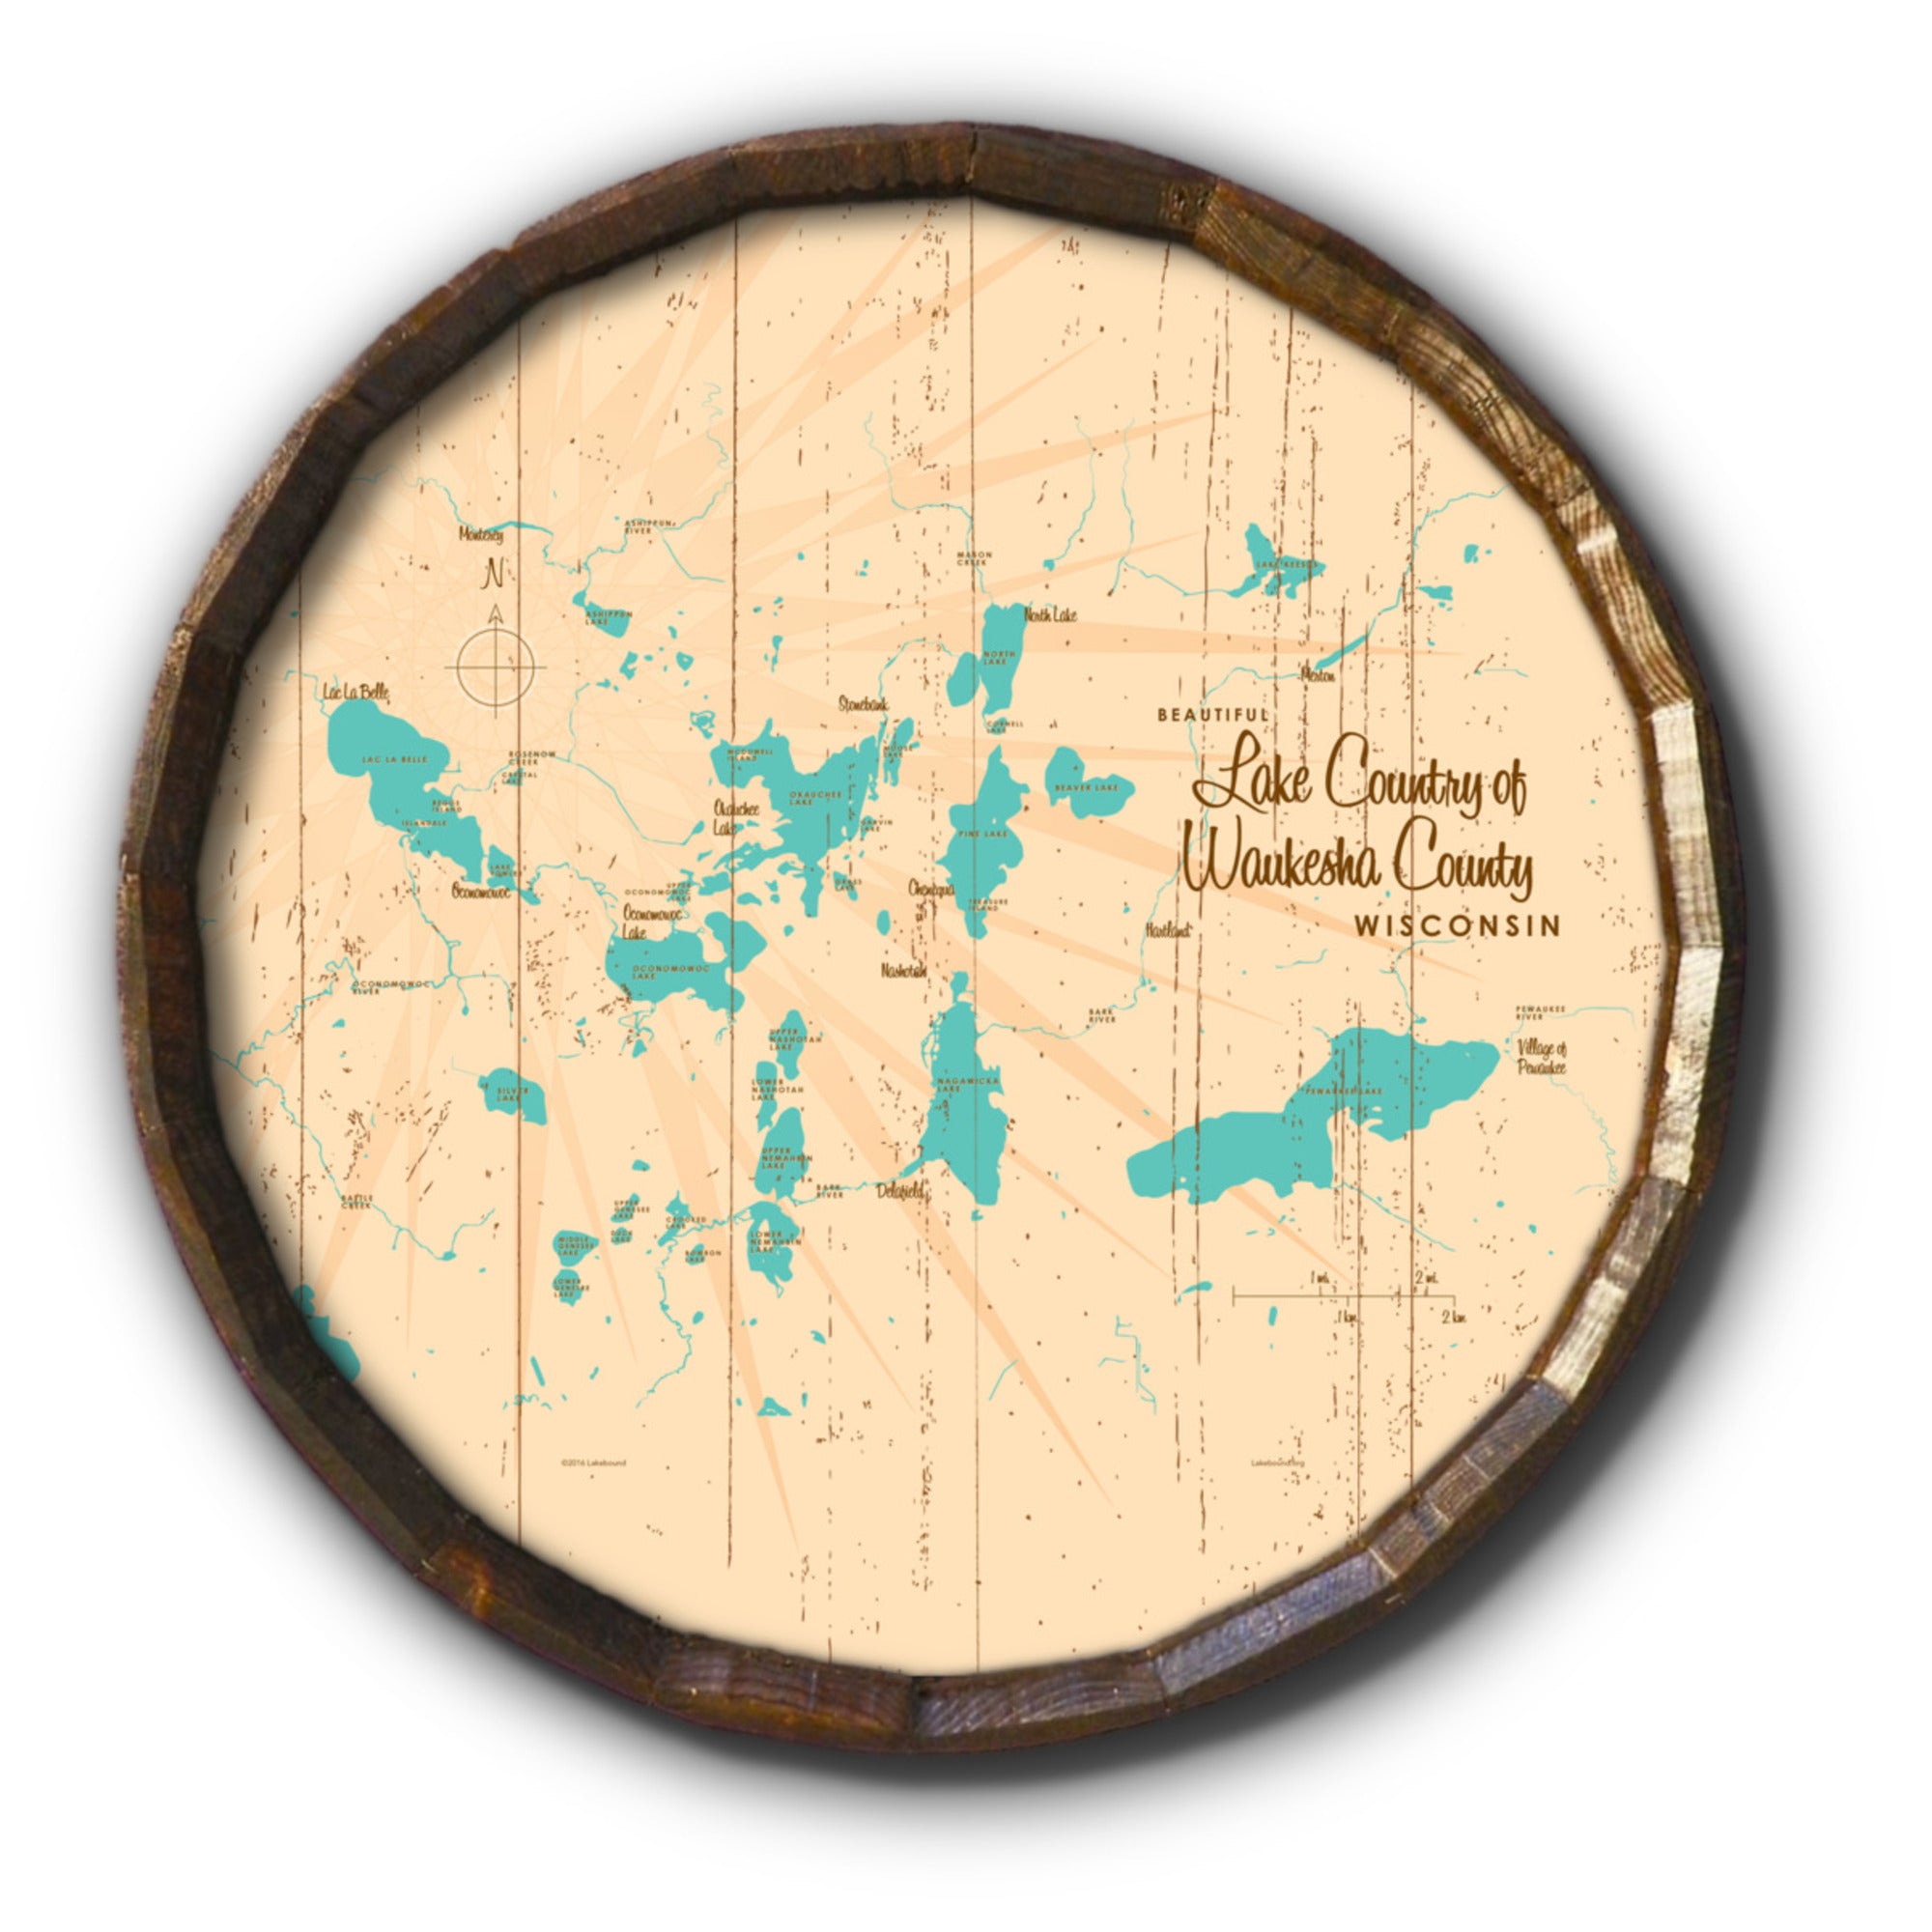 Lake Country Waukesha County Wisconsin, Rustic Barrel End Map Art